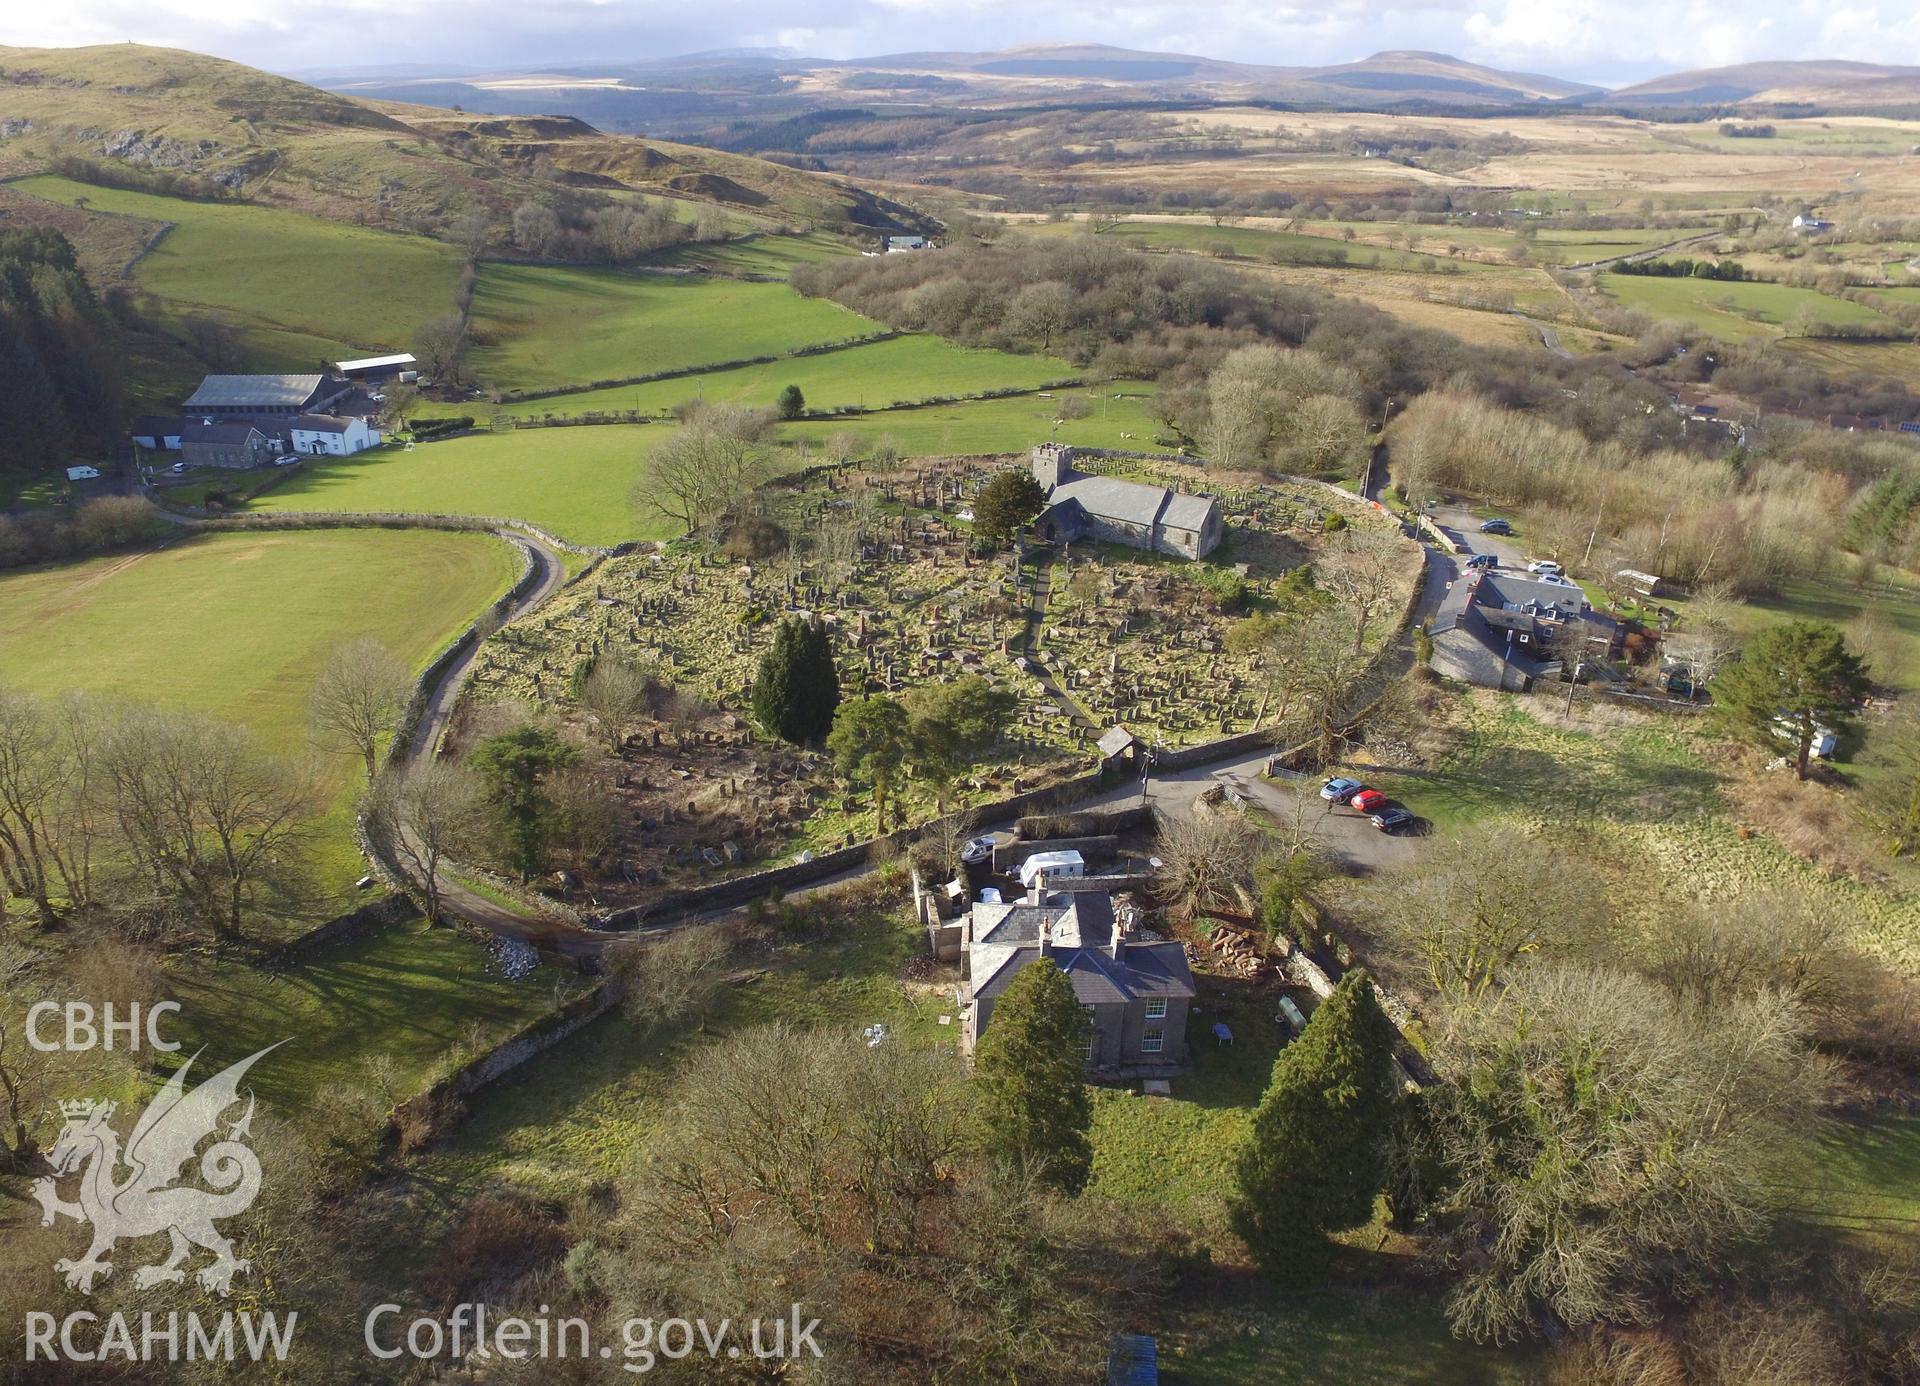 Colour aerial photo showing Penderyn, taken by Paul R. Davis,  28th March 2016.